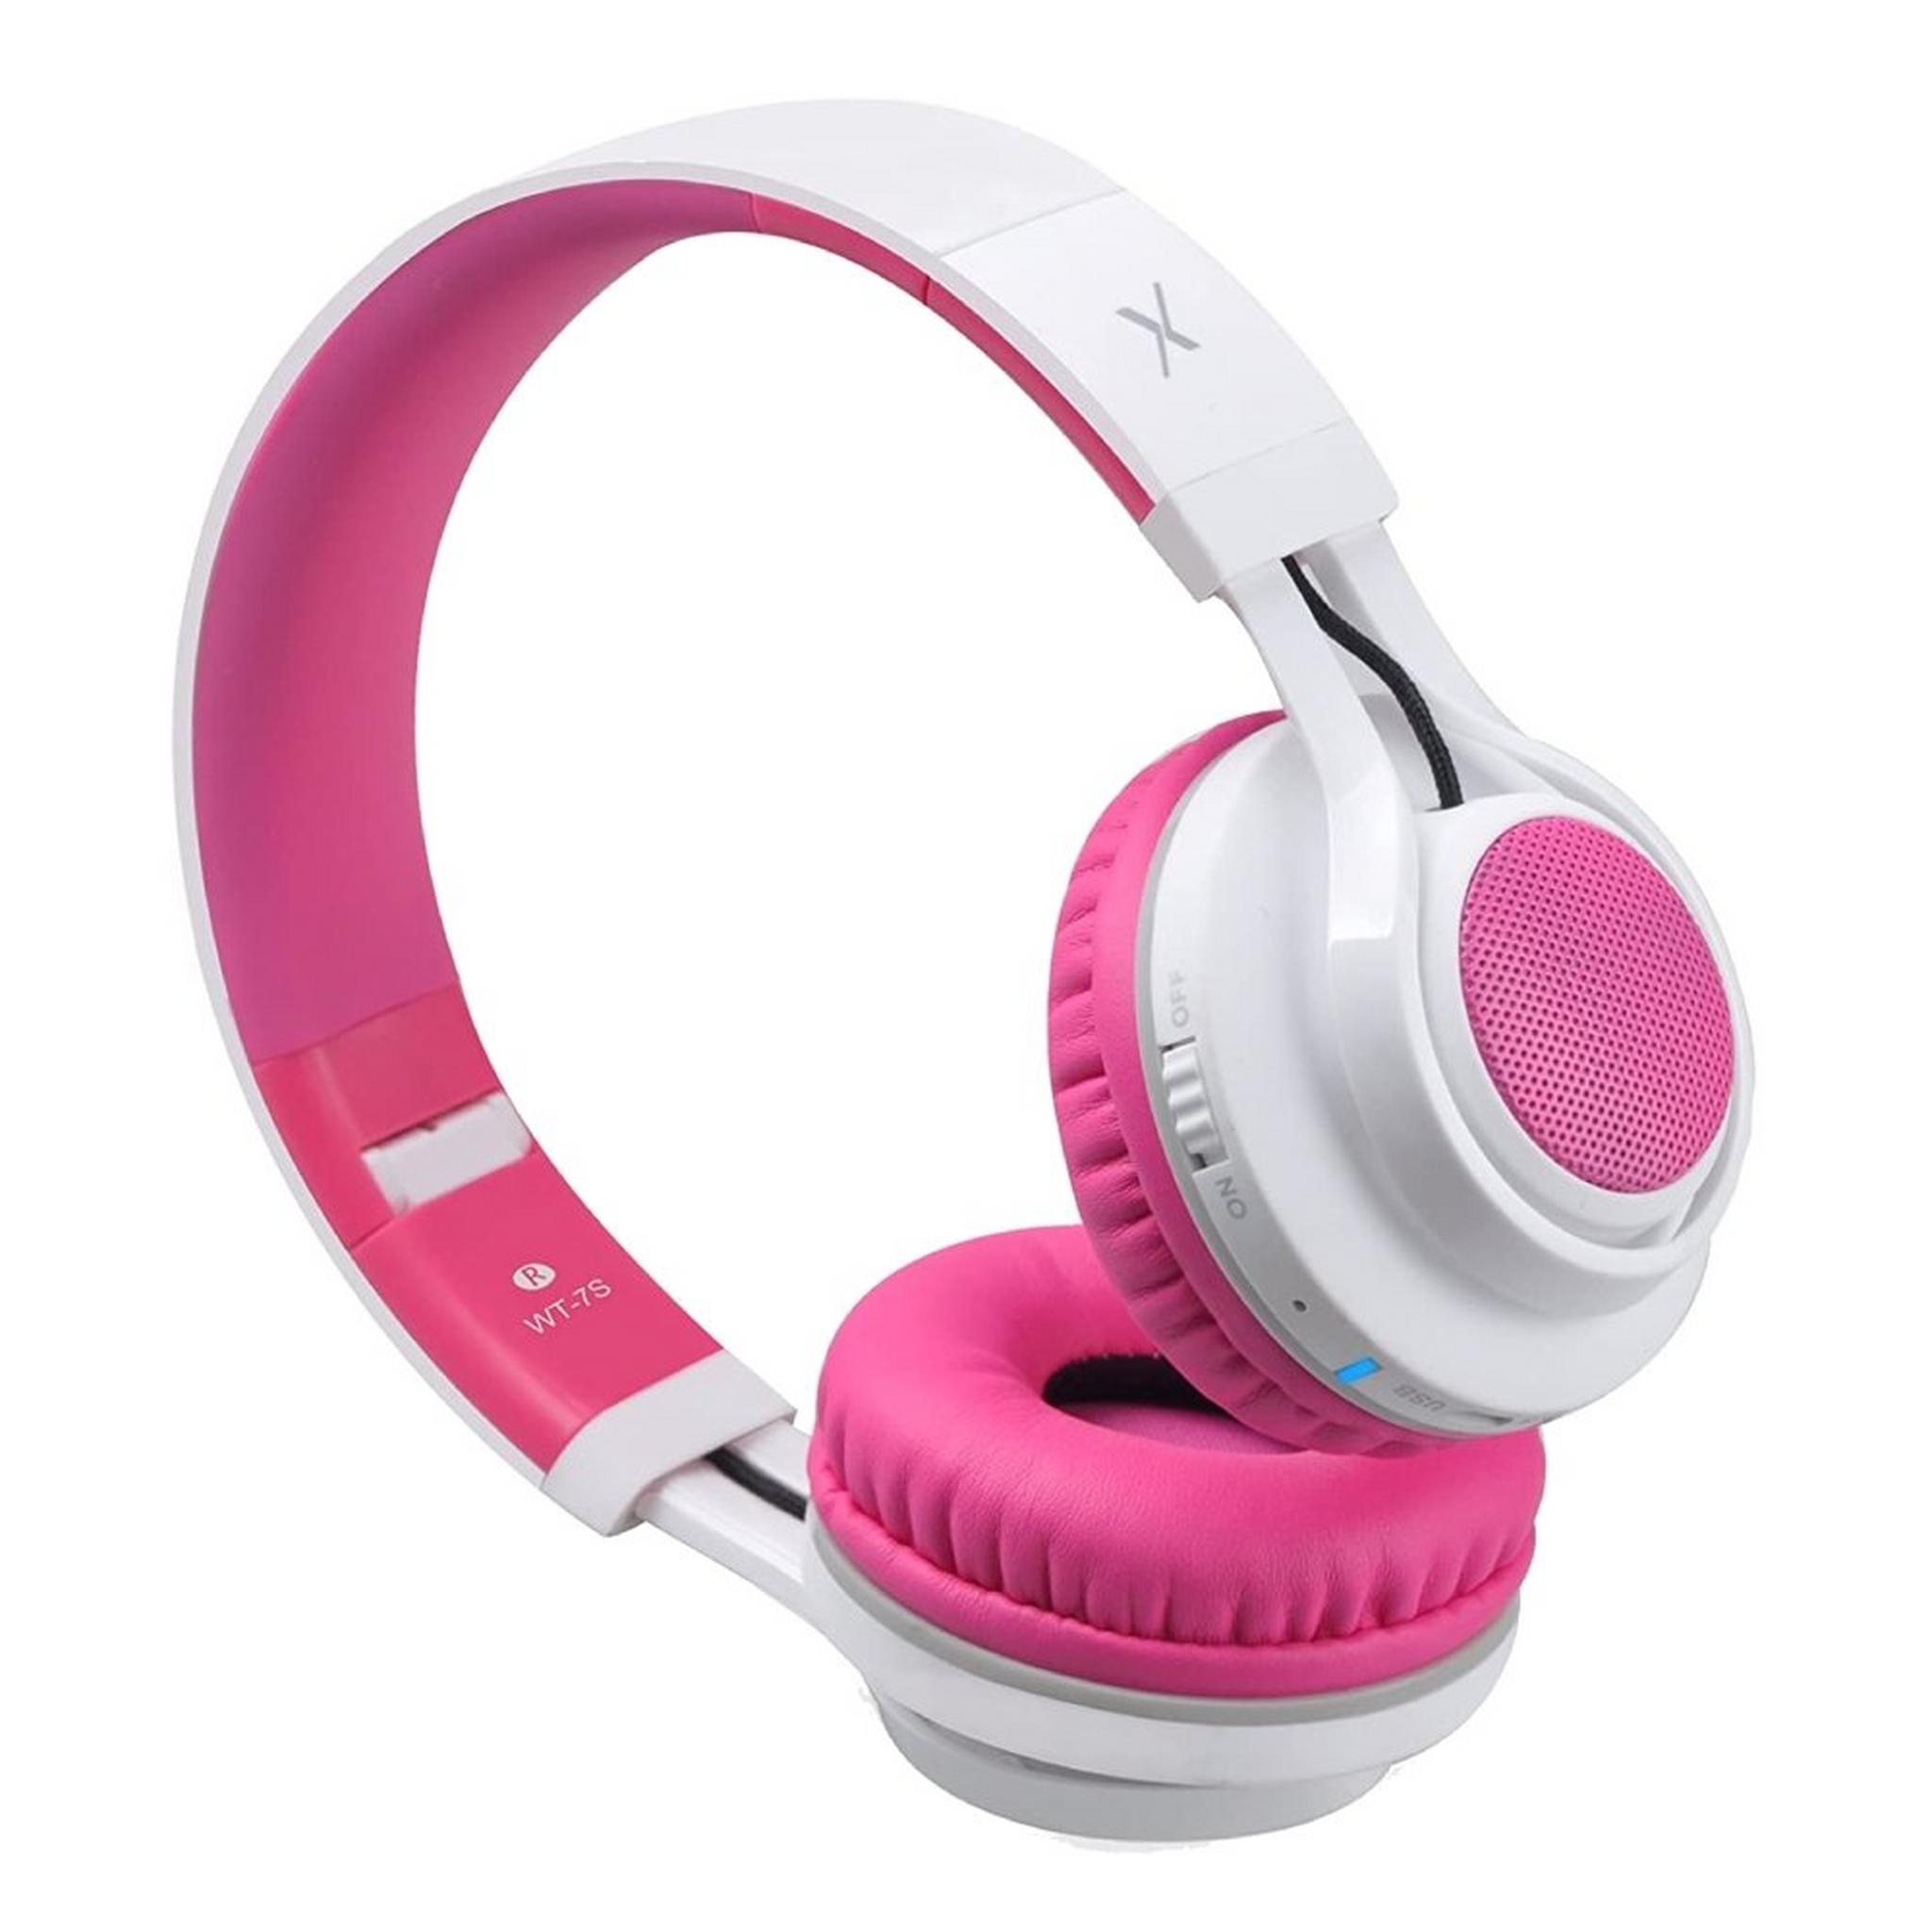 Riwbox Kids LED Wireless Headphones - Pink/White